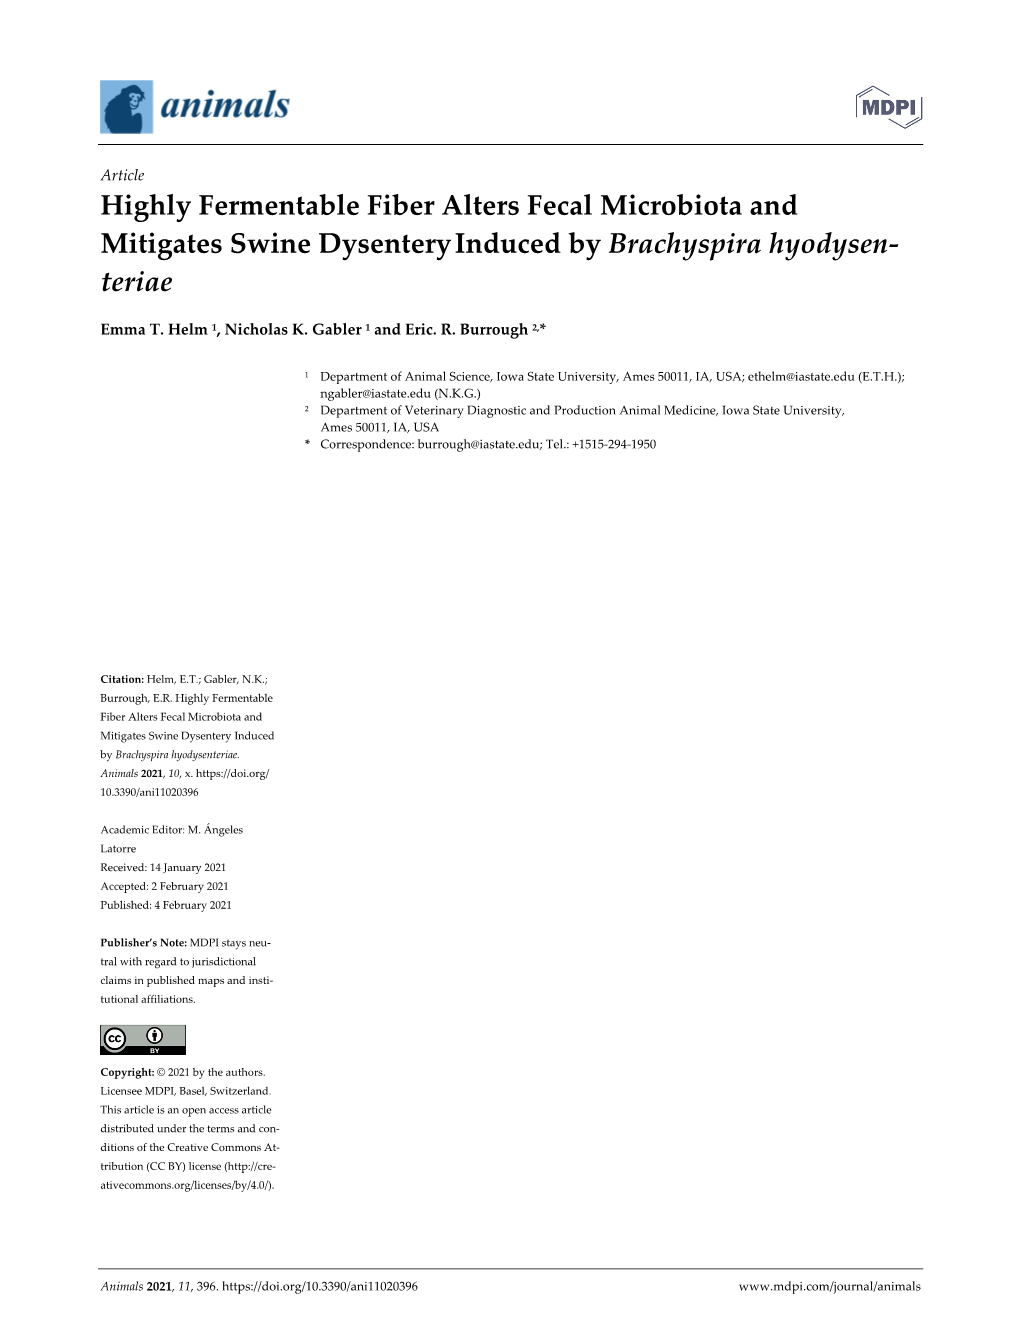 Highly Fermentable Fiber Alters Fecal Microbiota and Mitigates Swine Dysentery Induced by Brachyspira Hyodysenteriae